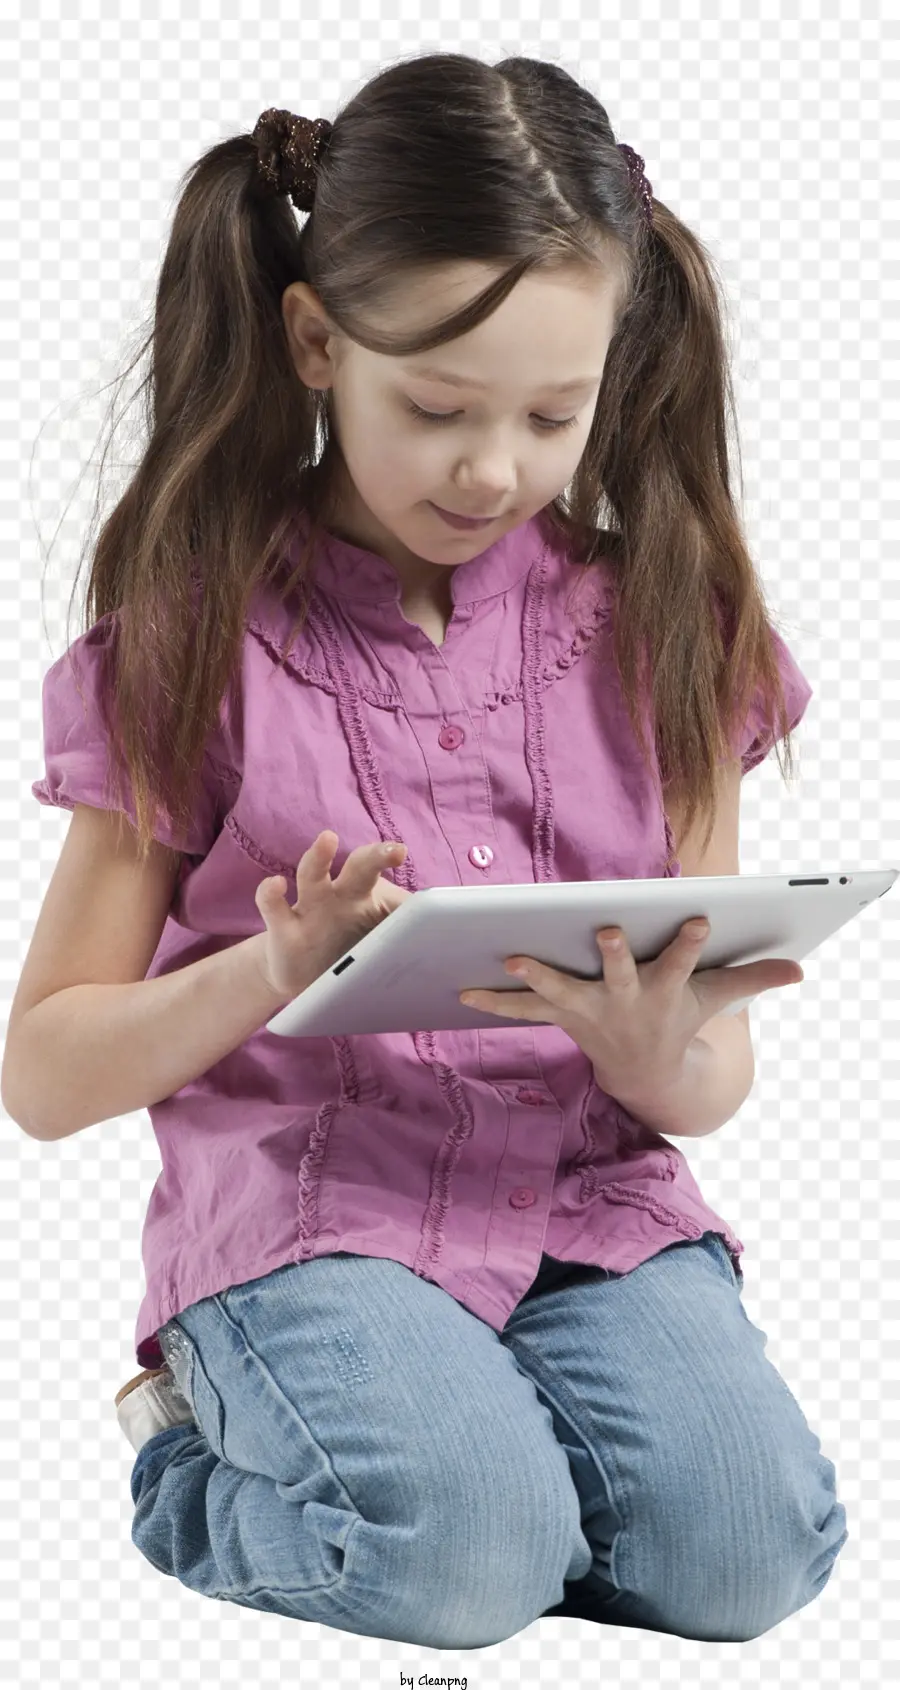 Leute junges Mädchen Tablet Technologie Pink Shirt - Junges Mädchen mit Tablet, rosa Hemd, Pferdeschwanz